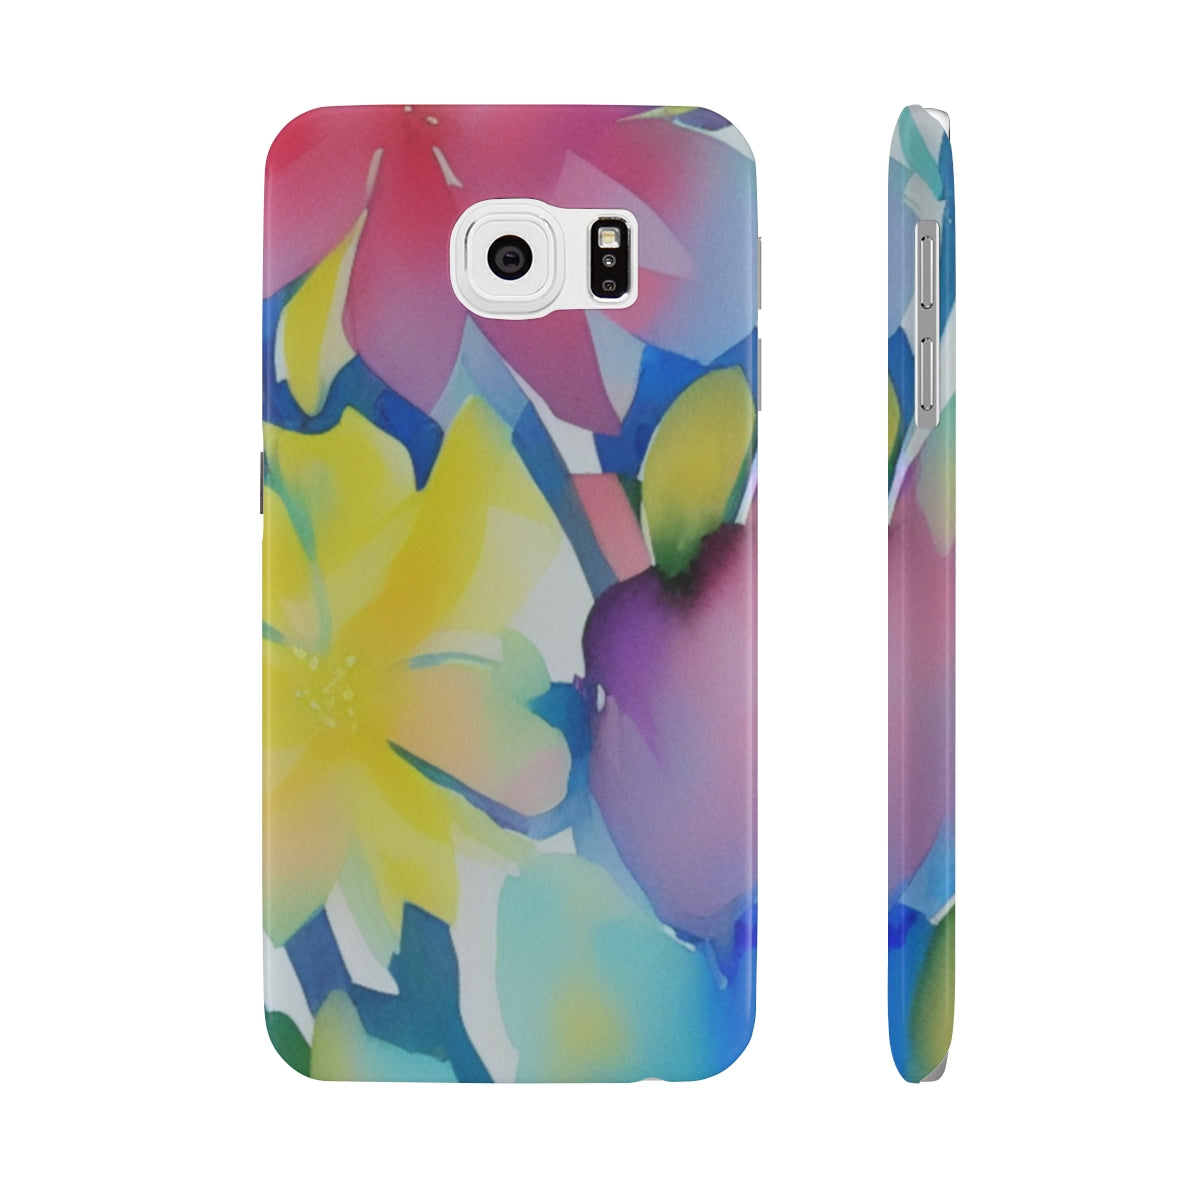 Elegant Watercolour Flower Design Phone Case For iPhone And Samsung Phones